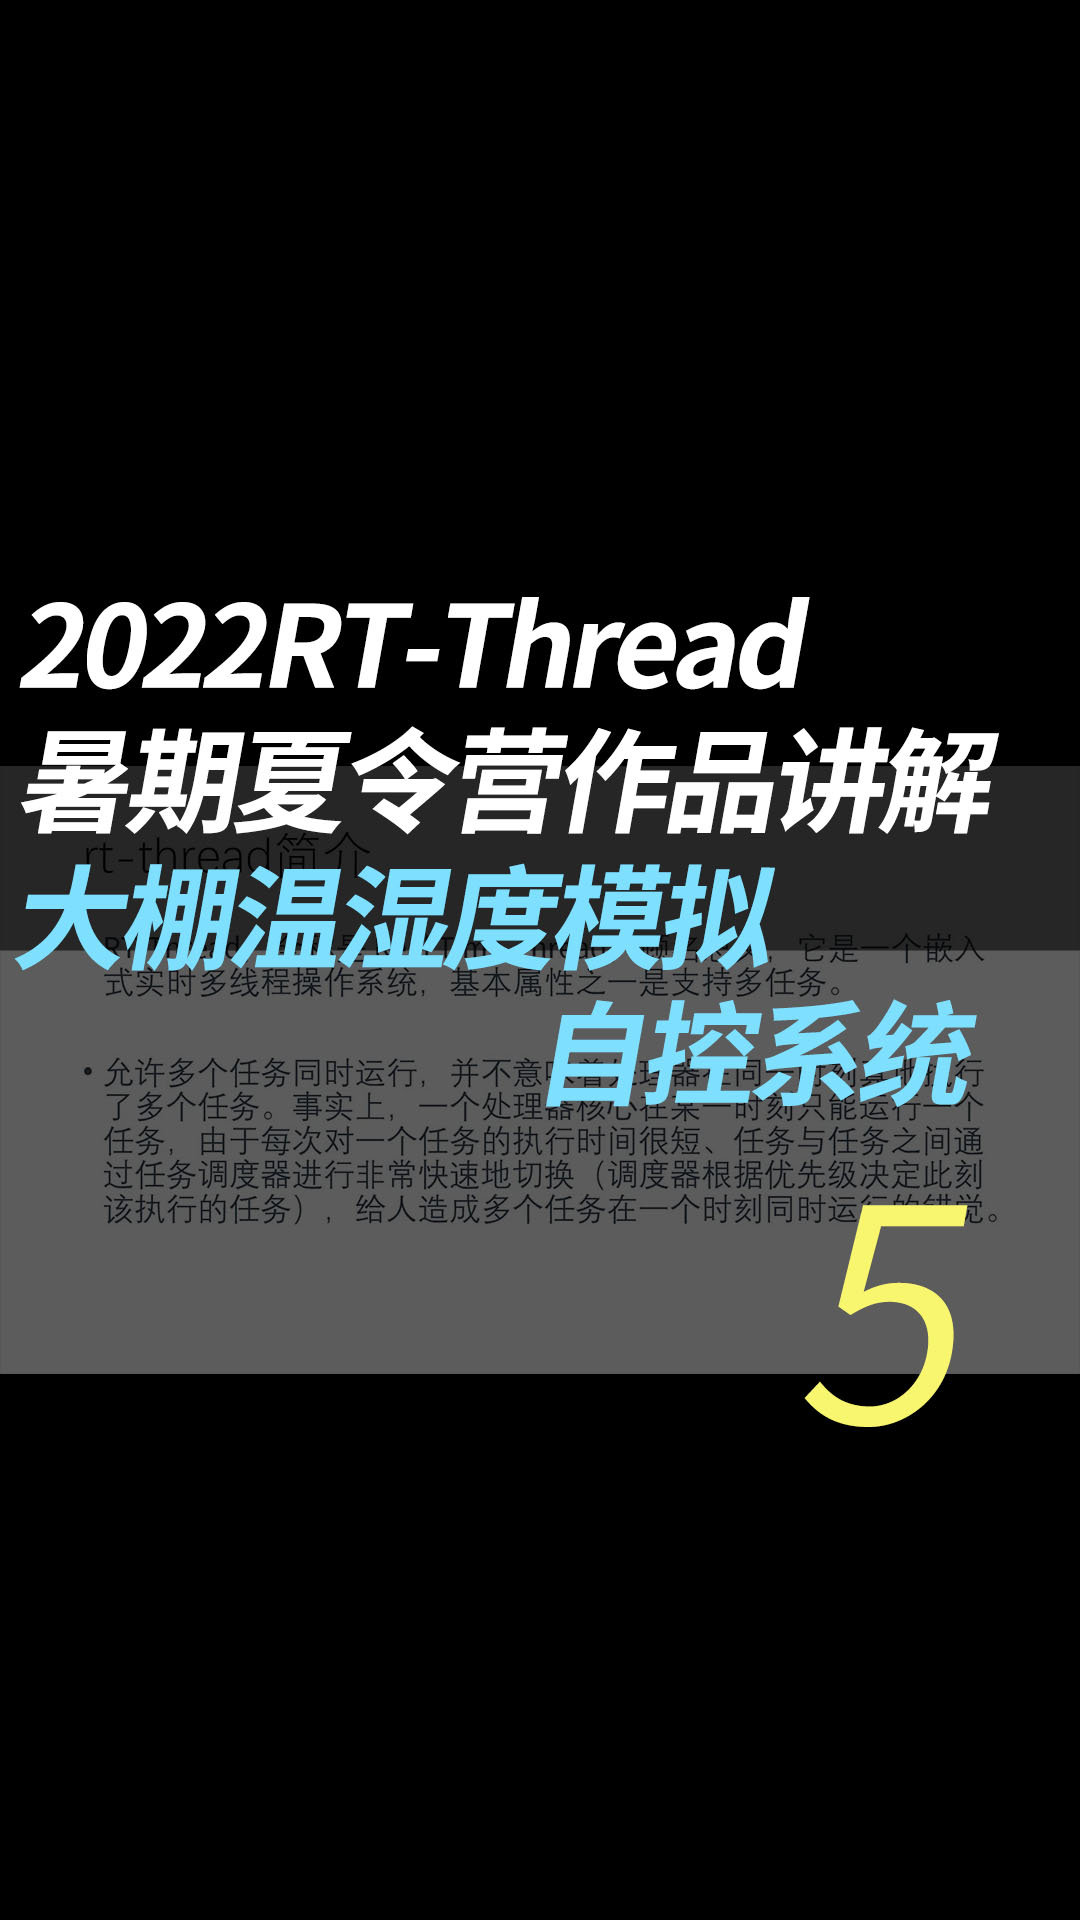 2022RT-Thread暑期夏令营作品讲解 - 5.软件框架#RT-Thread 